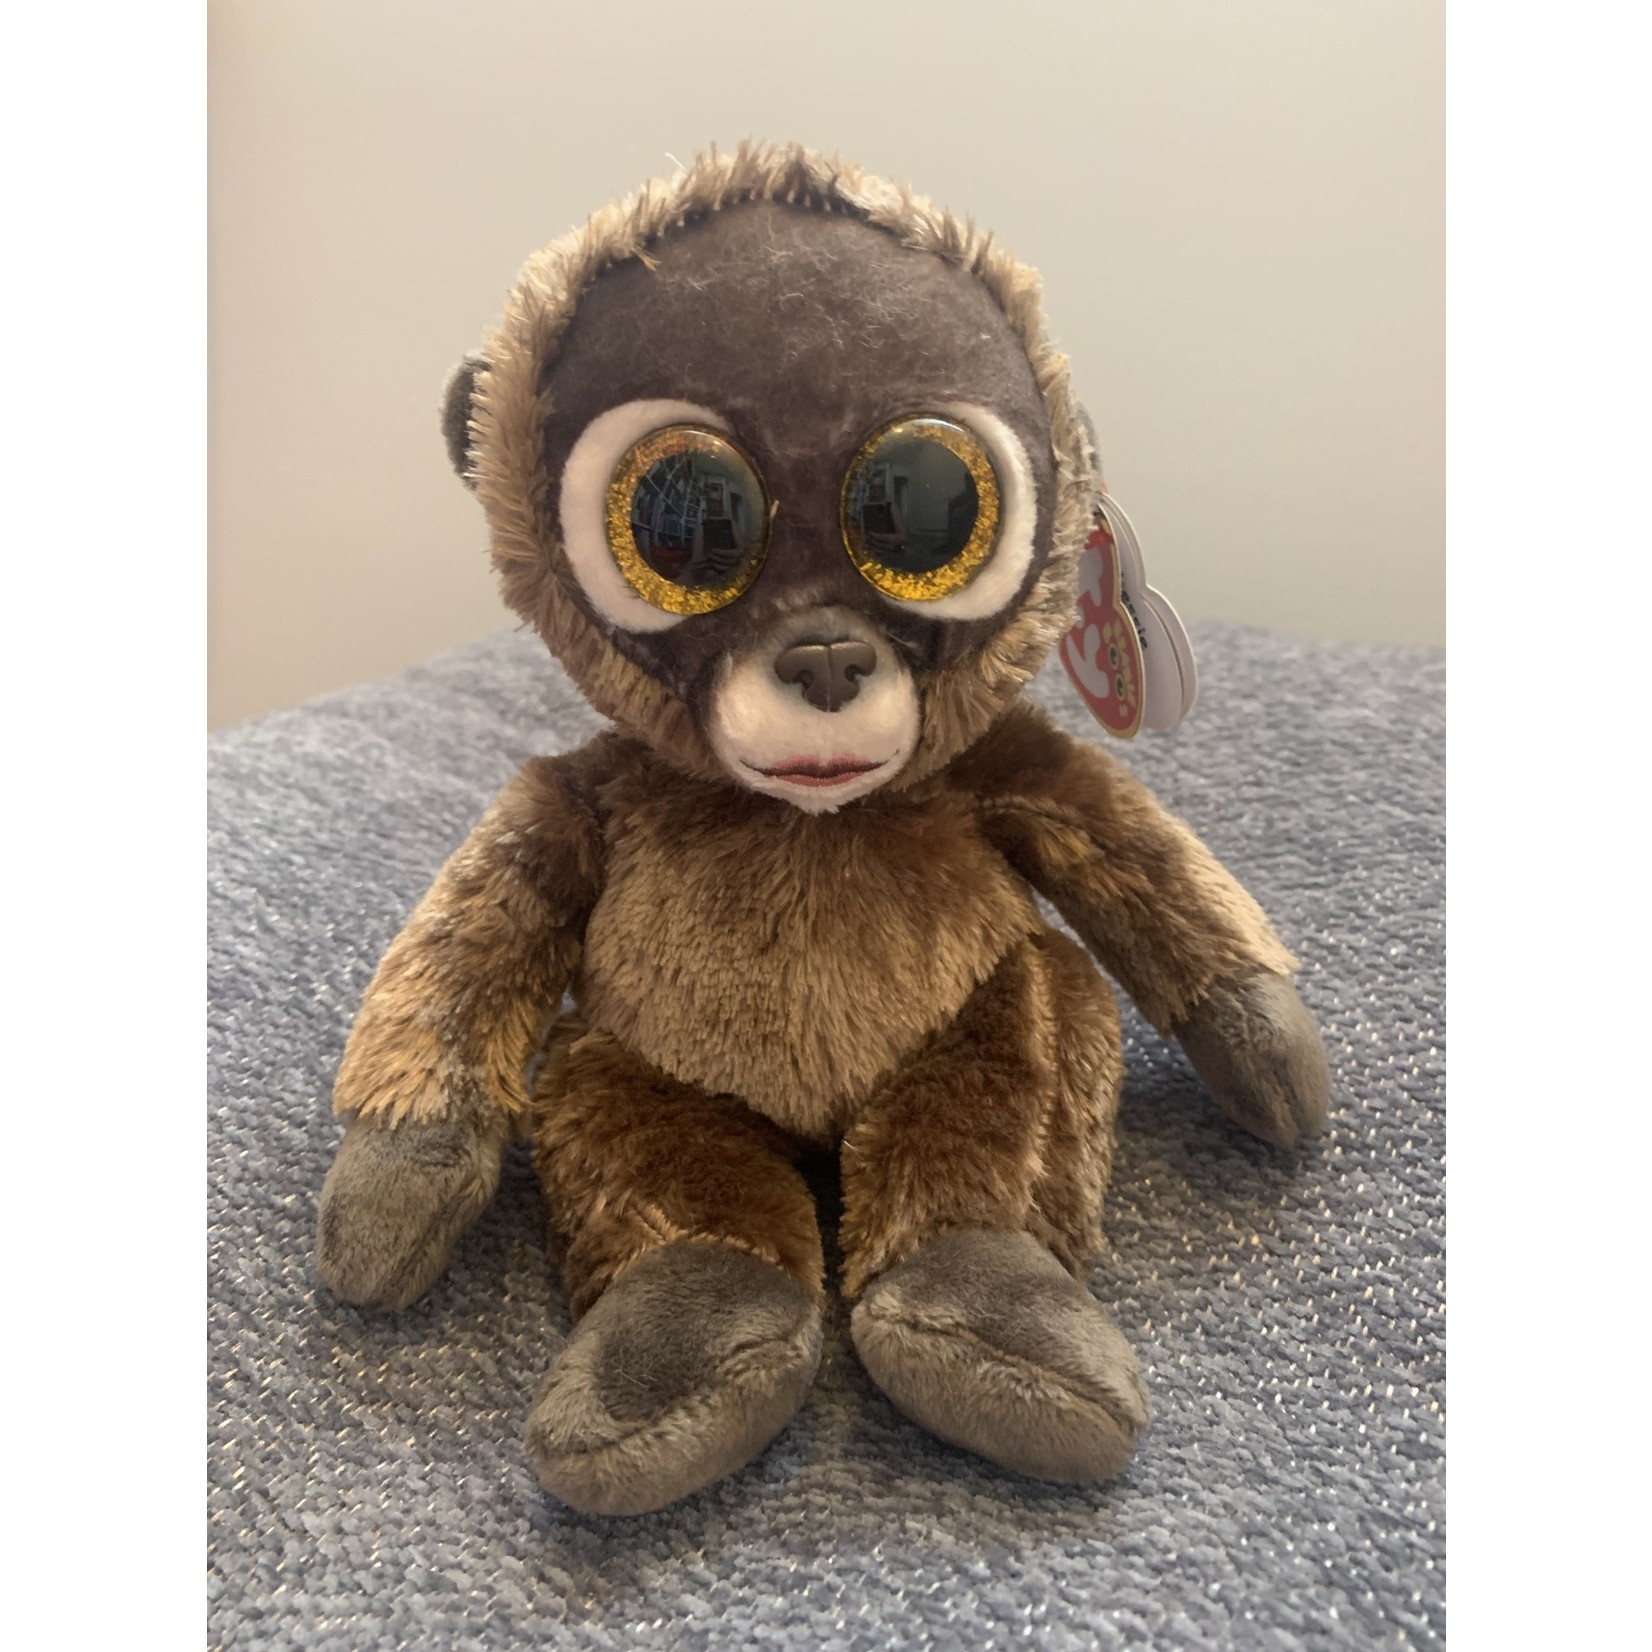 Ty Beanie Boo Regular Chessie Monkey - Minds Alive! Toys Crafts Books